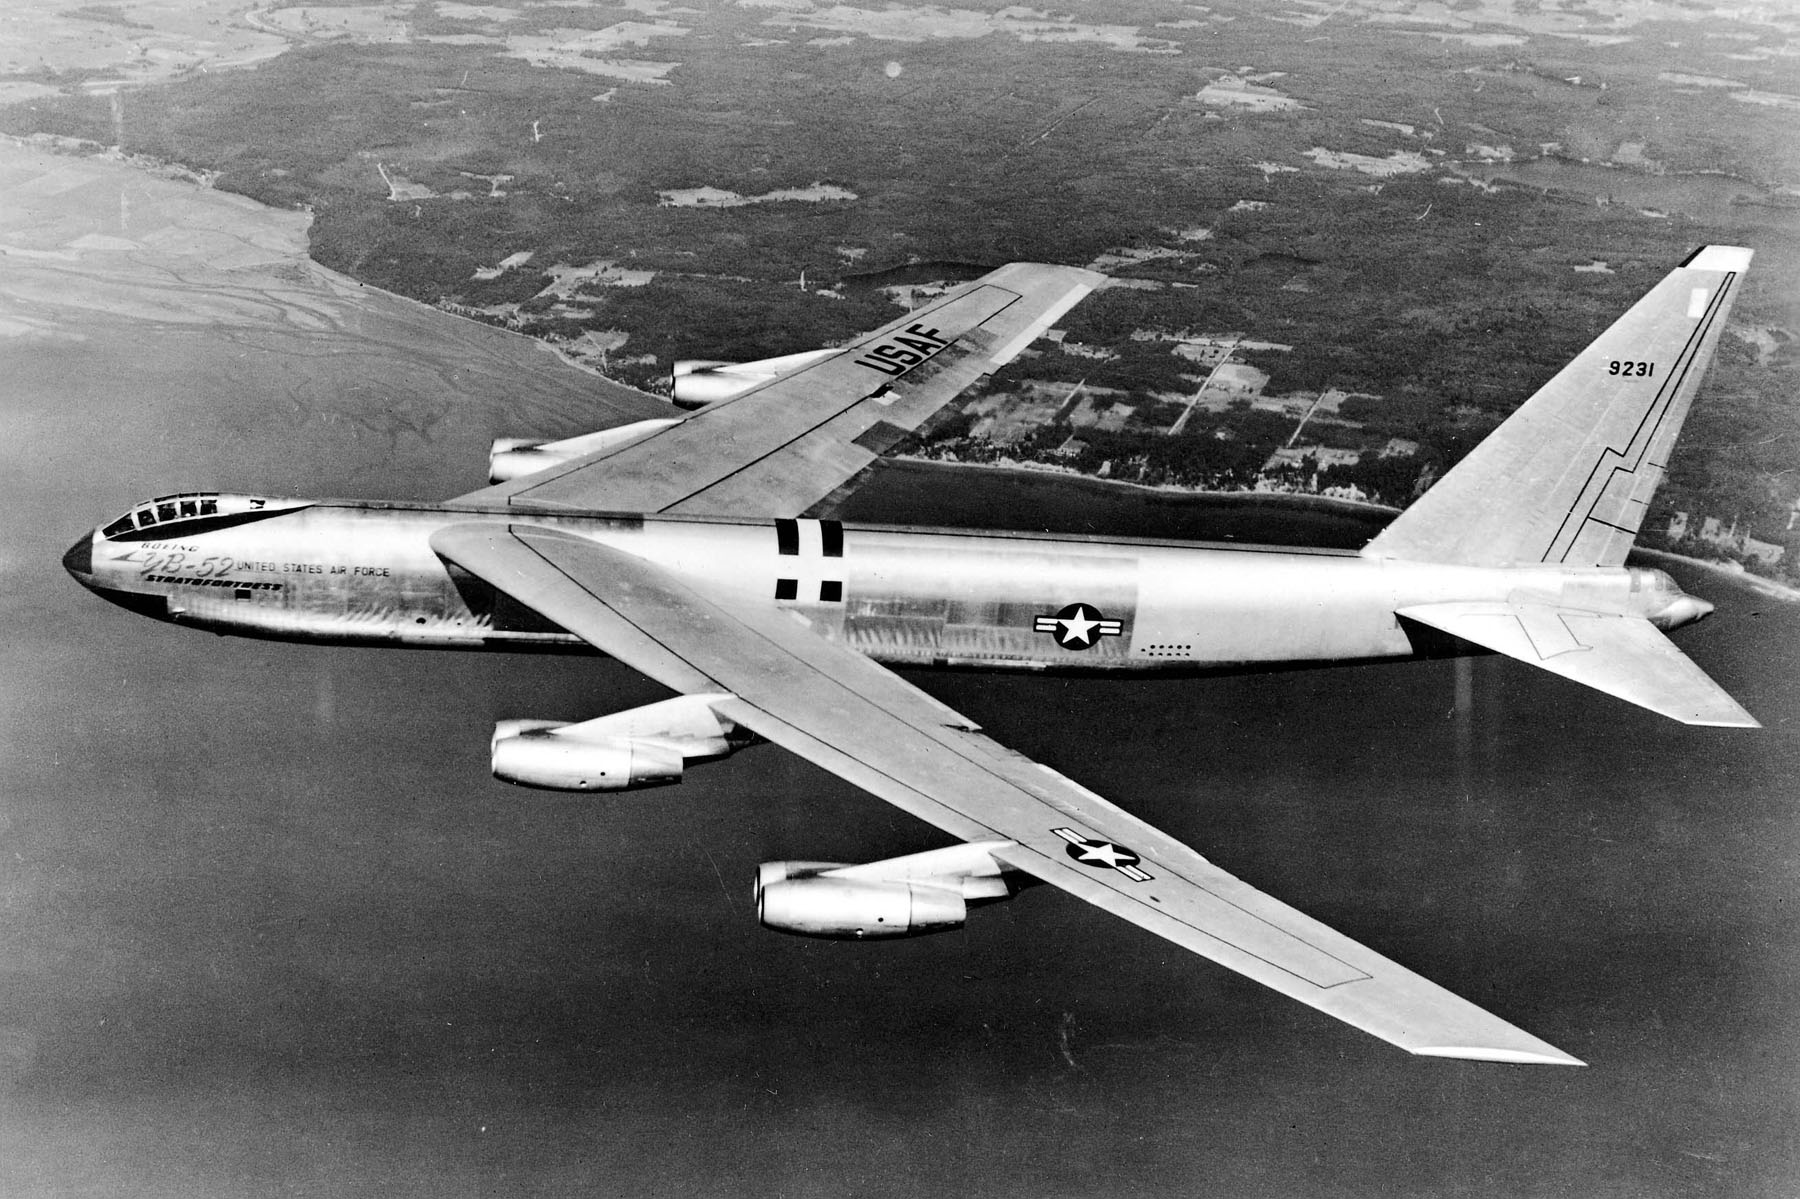 Boeing YB-52 Stratofortress 49-231. (U.S. Air Force)